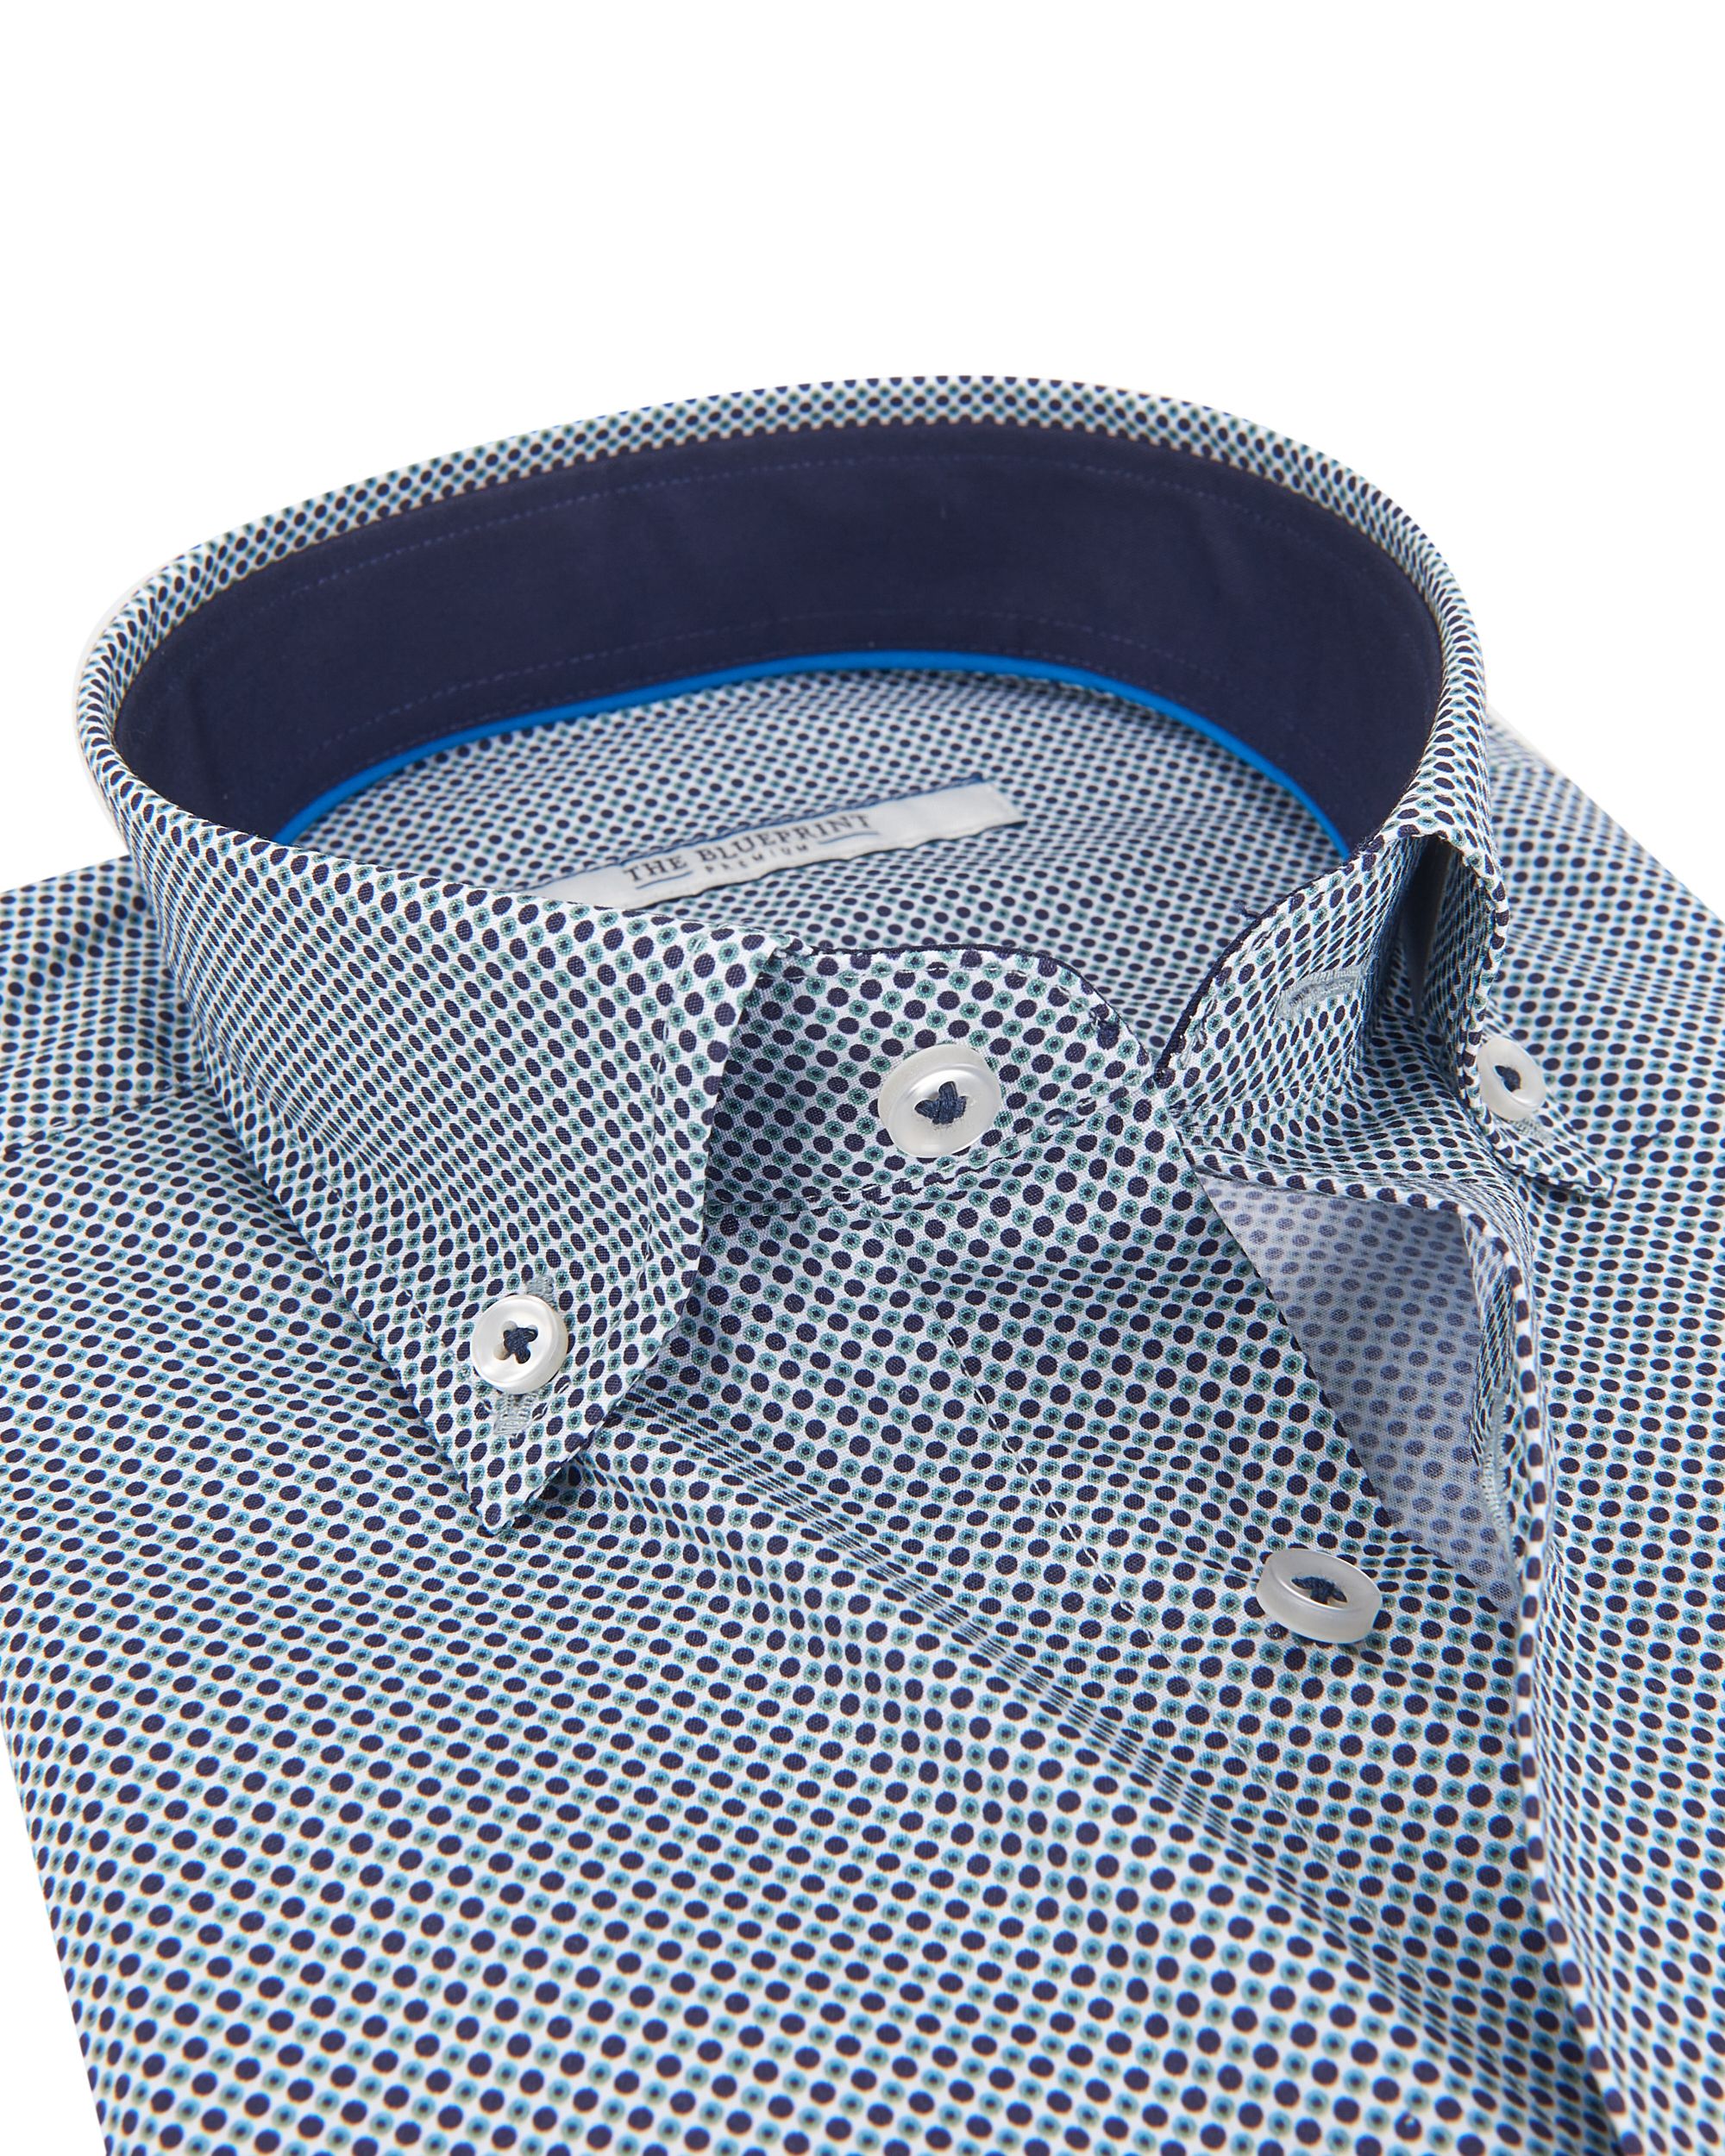 The BLUEPRINT Premium Trendy overhemd LM Groen dessin 084473-001-L